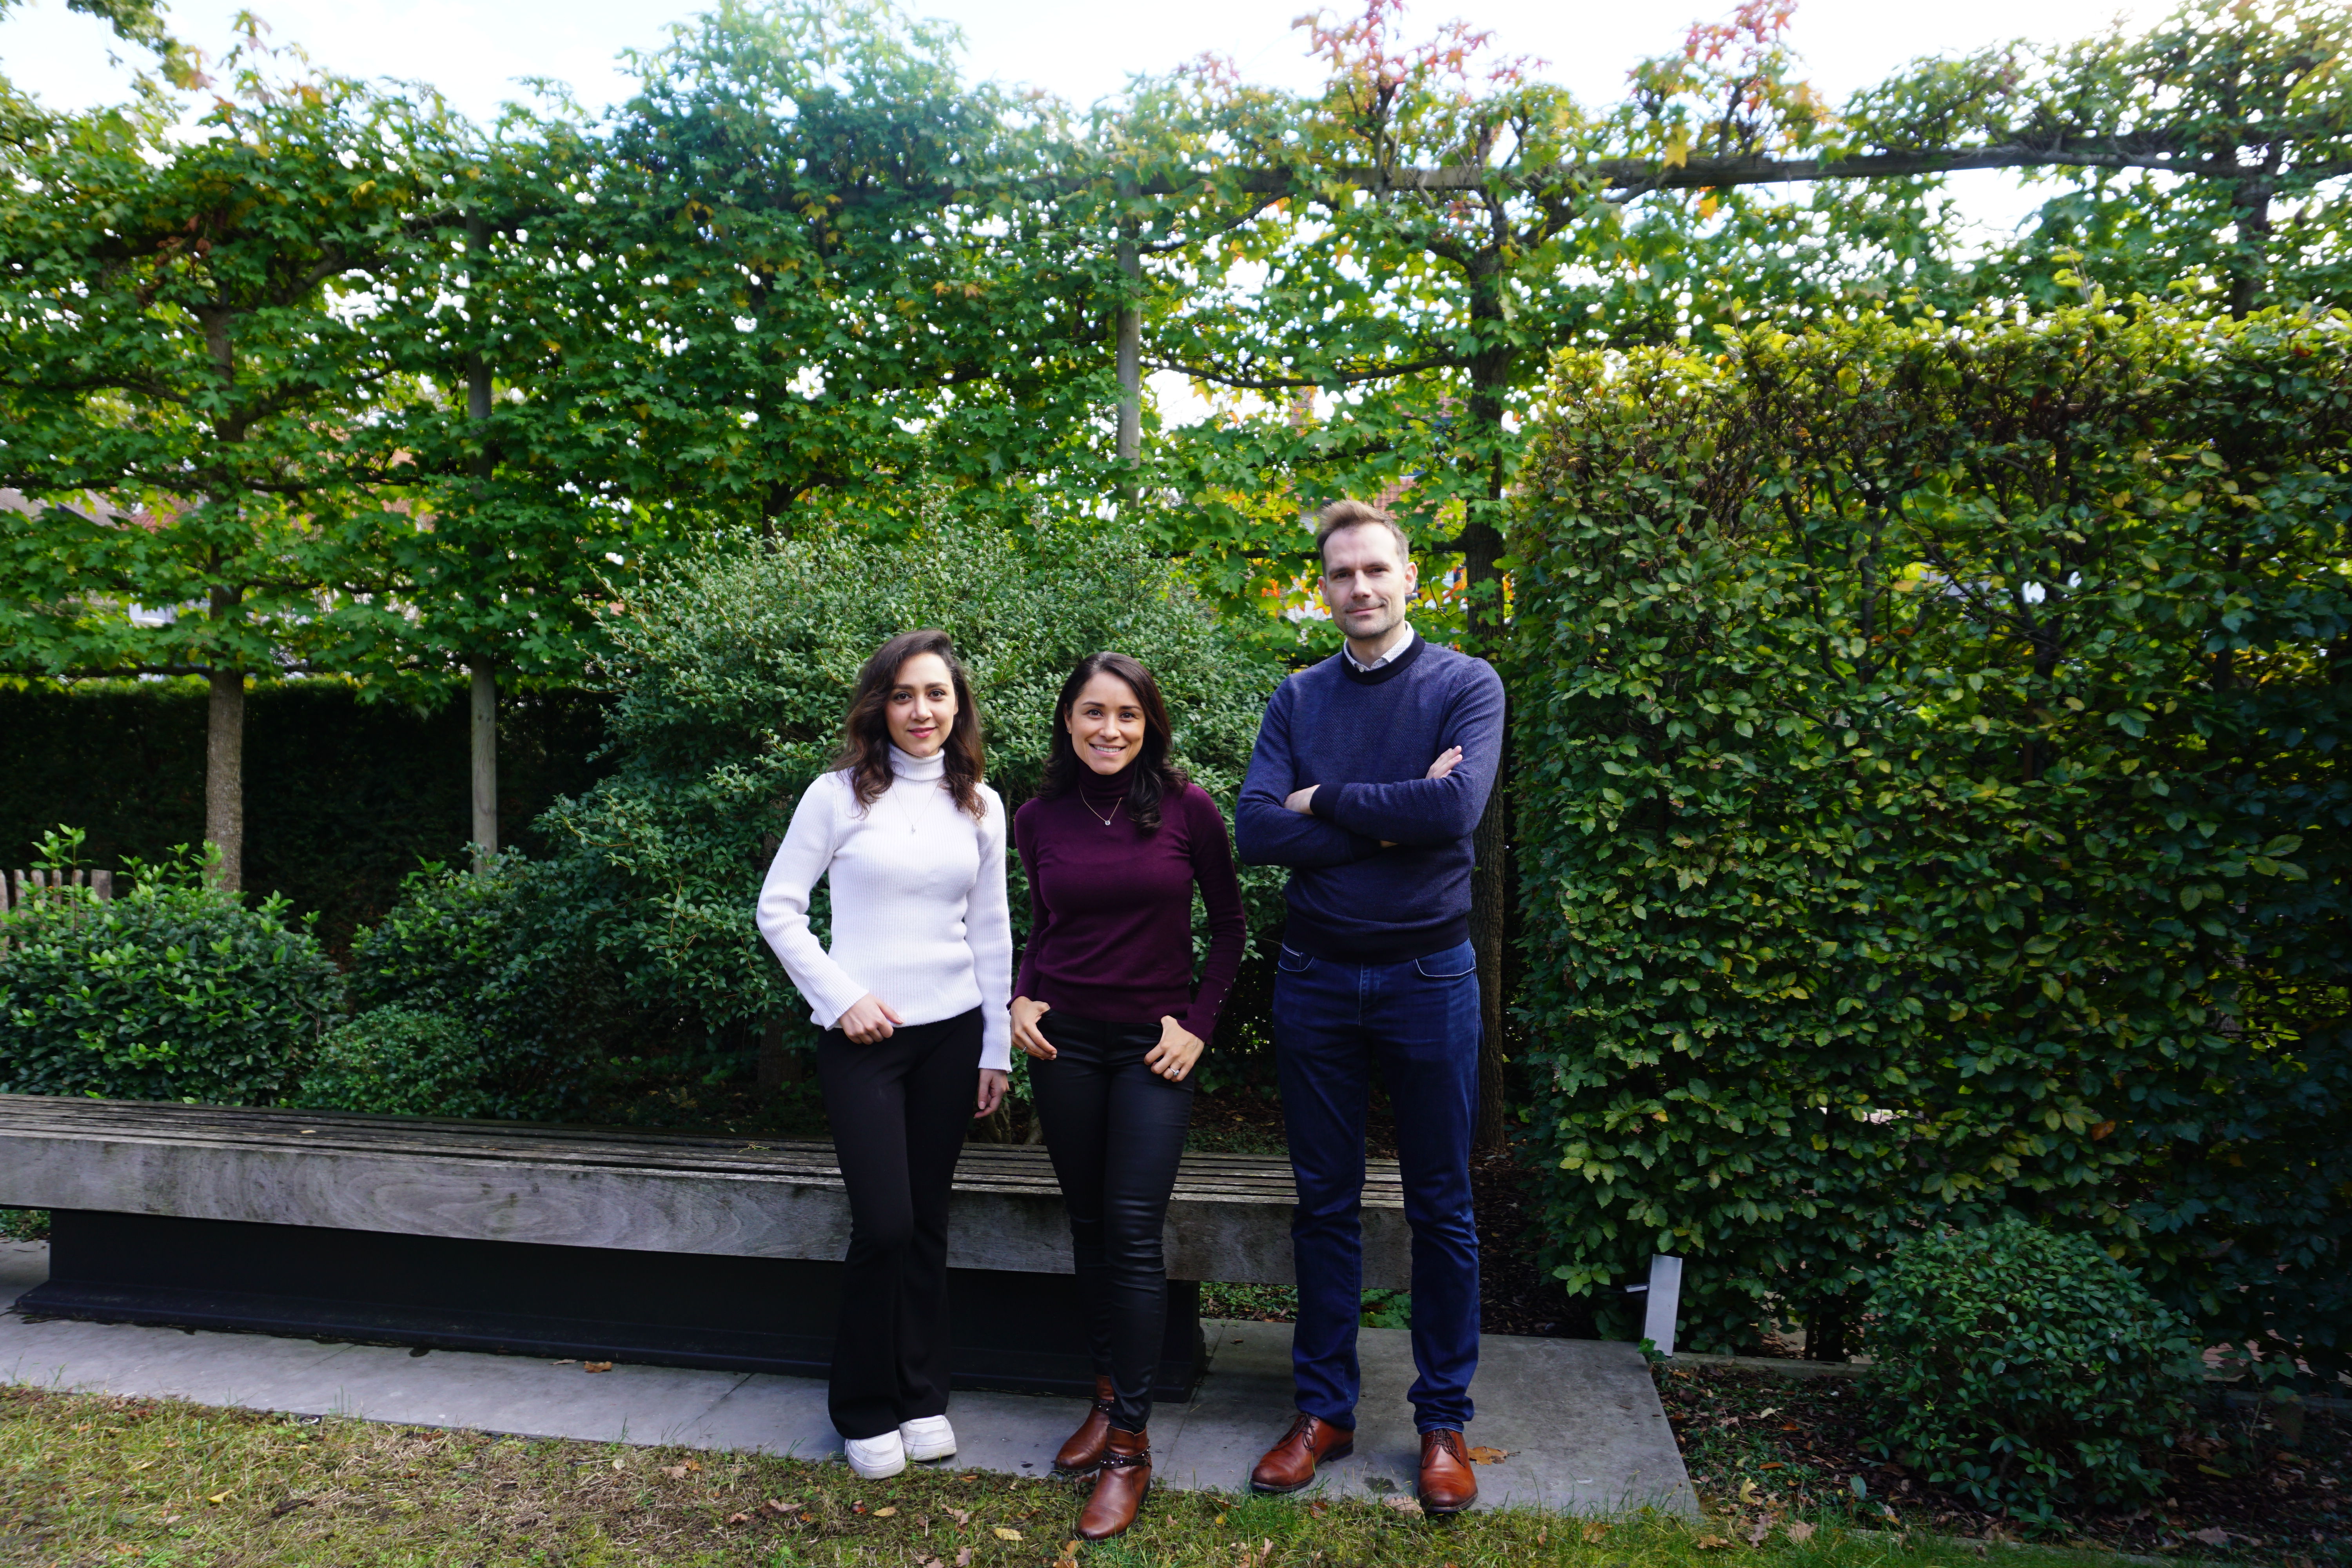 The Specifix team (from left to right): Dr. Soha Mahdi (CTO), Dr. Alejandra Ortega (CEO), and Prof. Dr. Matthias Vanhees (CMO)